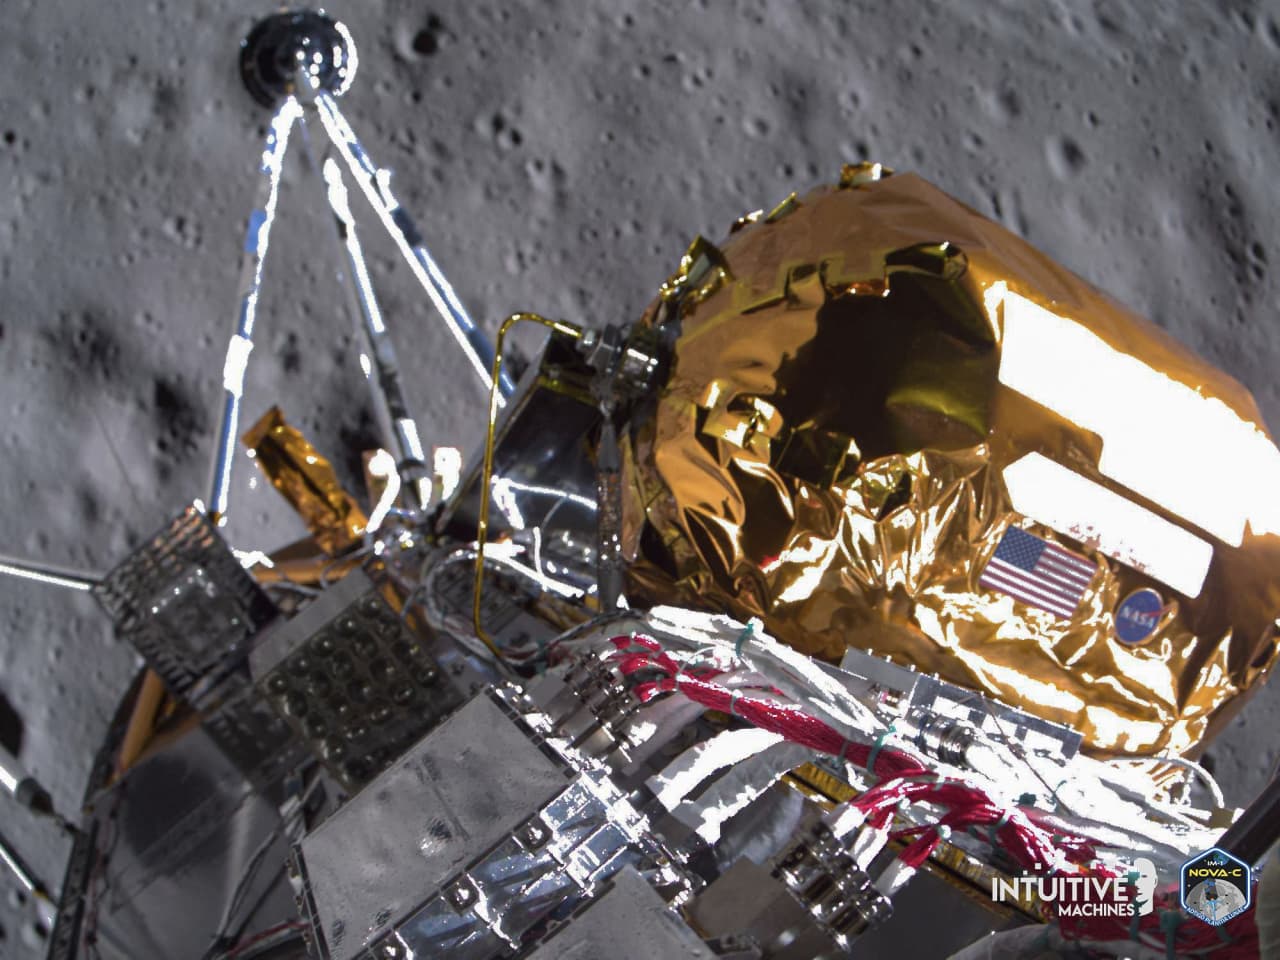 Odysseus lander ‘still kicking’ on the moon, says Intuitive Machines